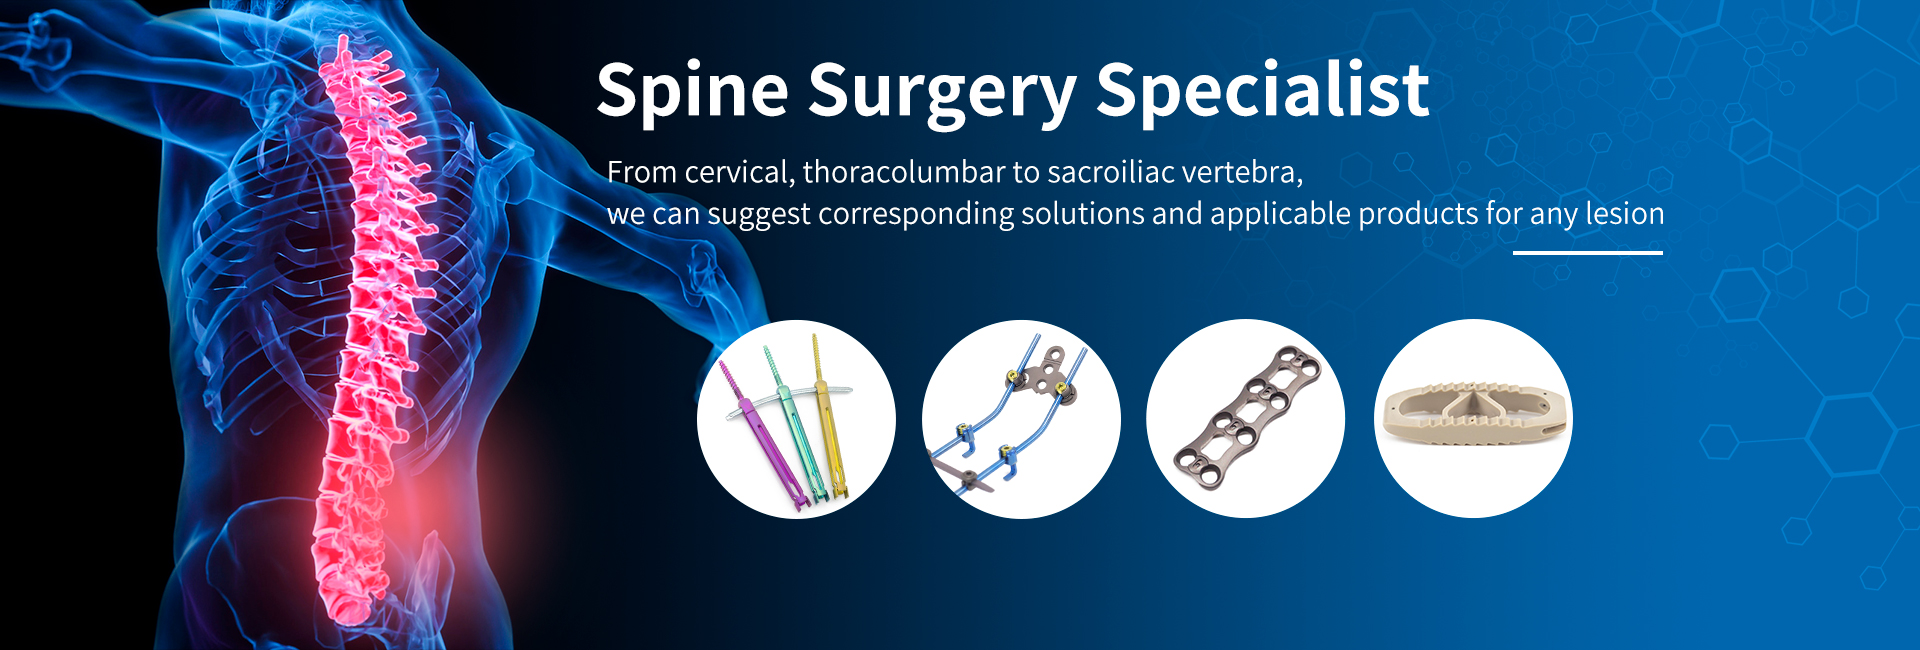 Spine Surgery Specialist